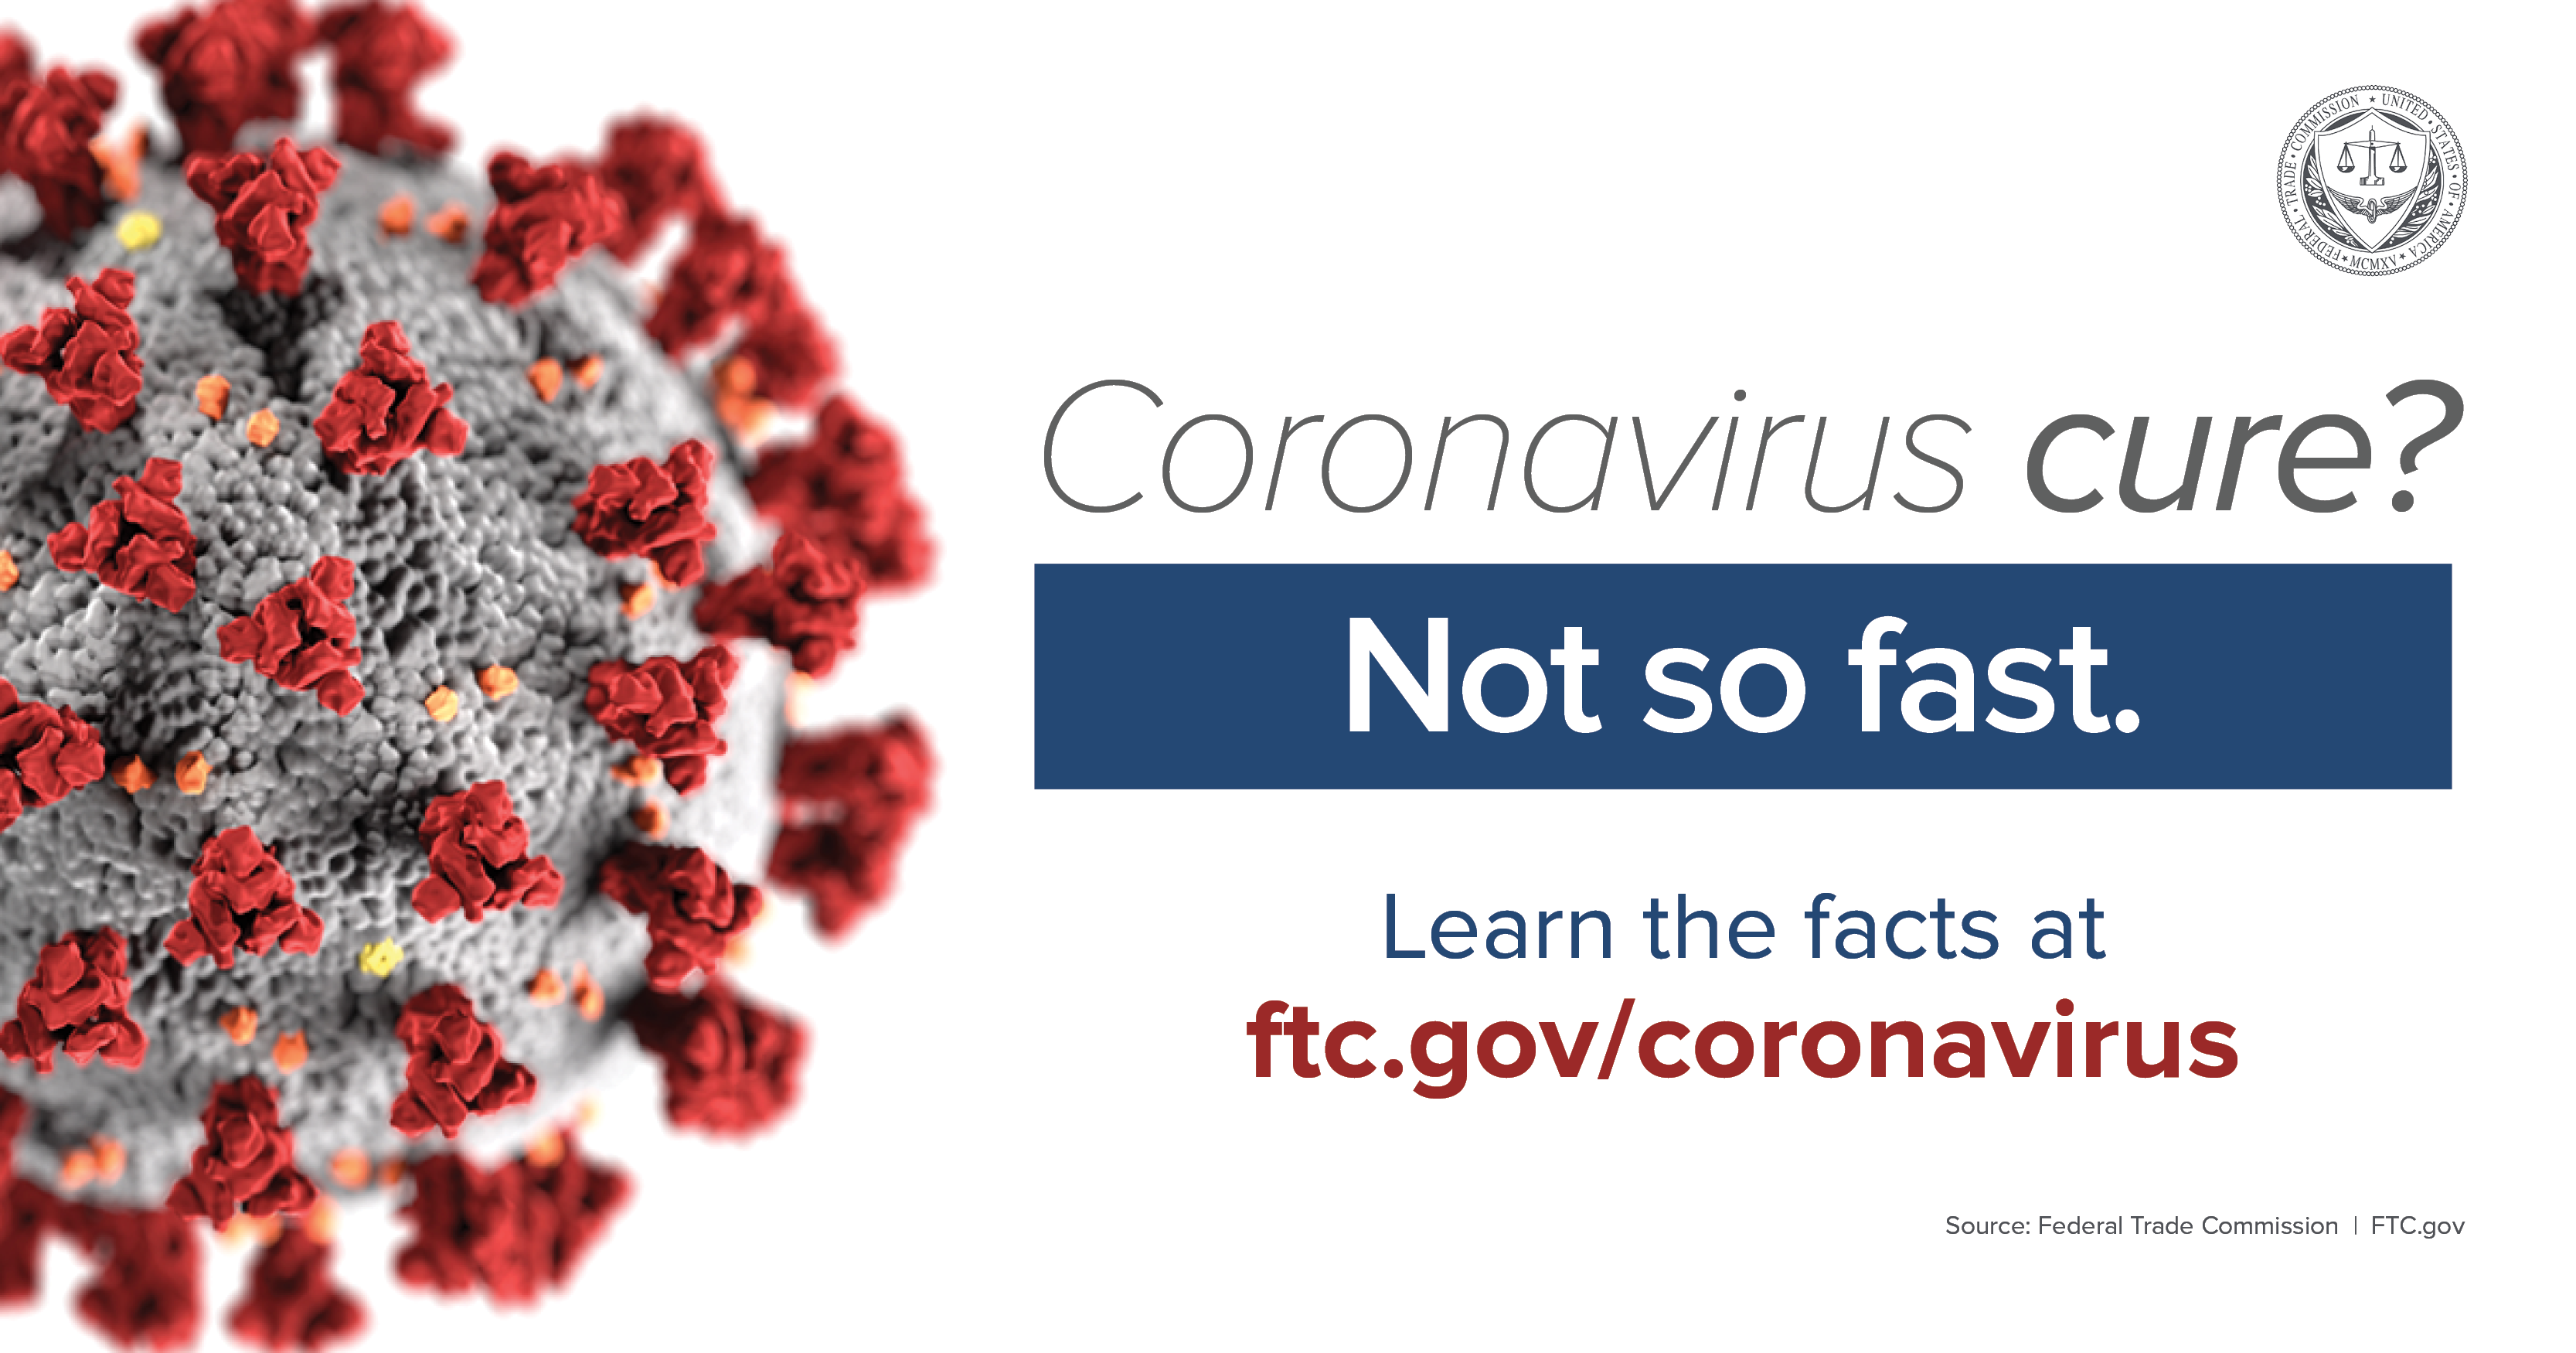 Coronavirus cure? No so fast.